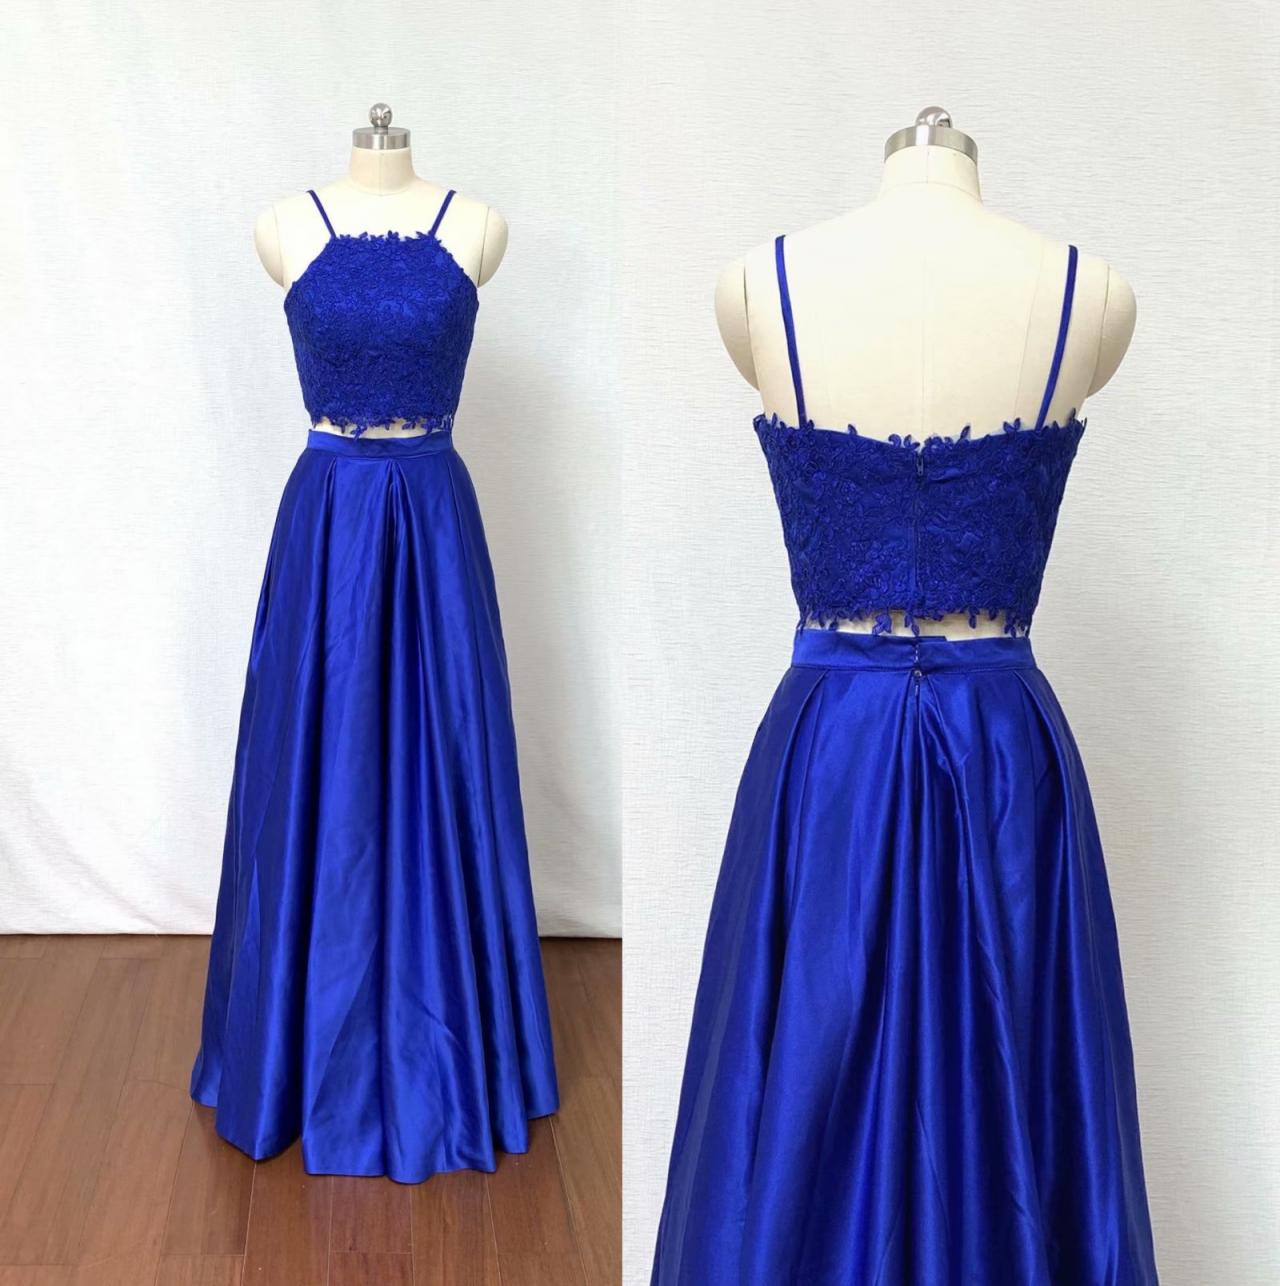 2019 Royal Blue 2 Piece Prom Dress Evening Dresses A Line Applique Prom Gowns